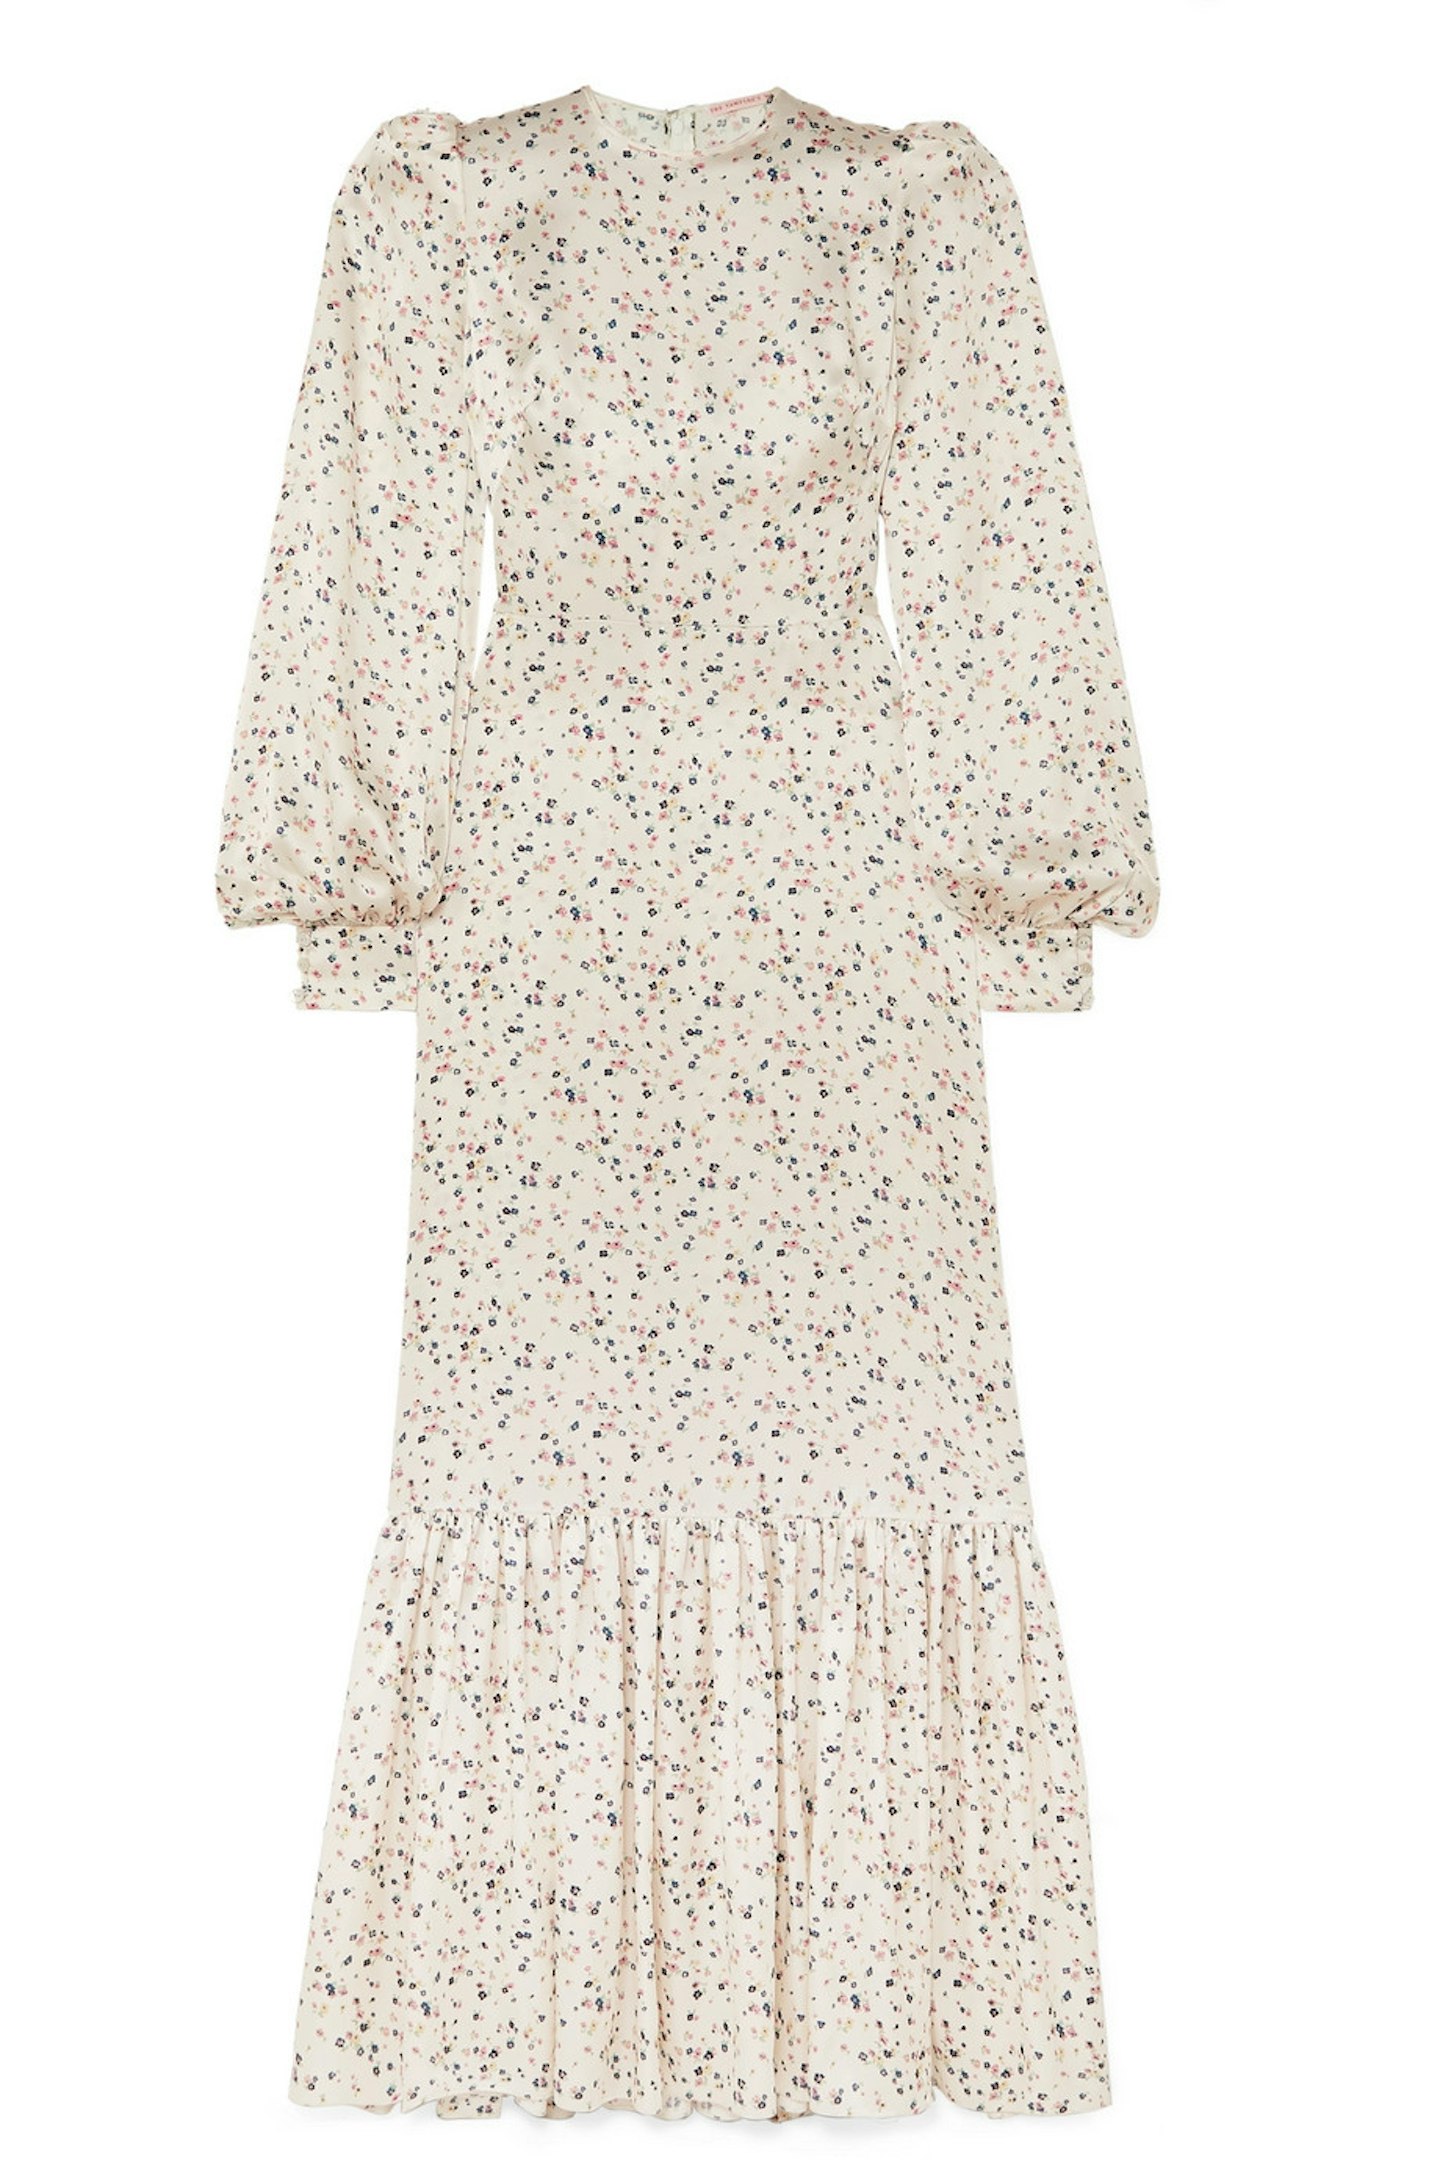 Floral Dress, £1100